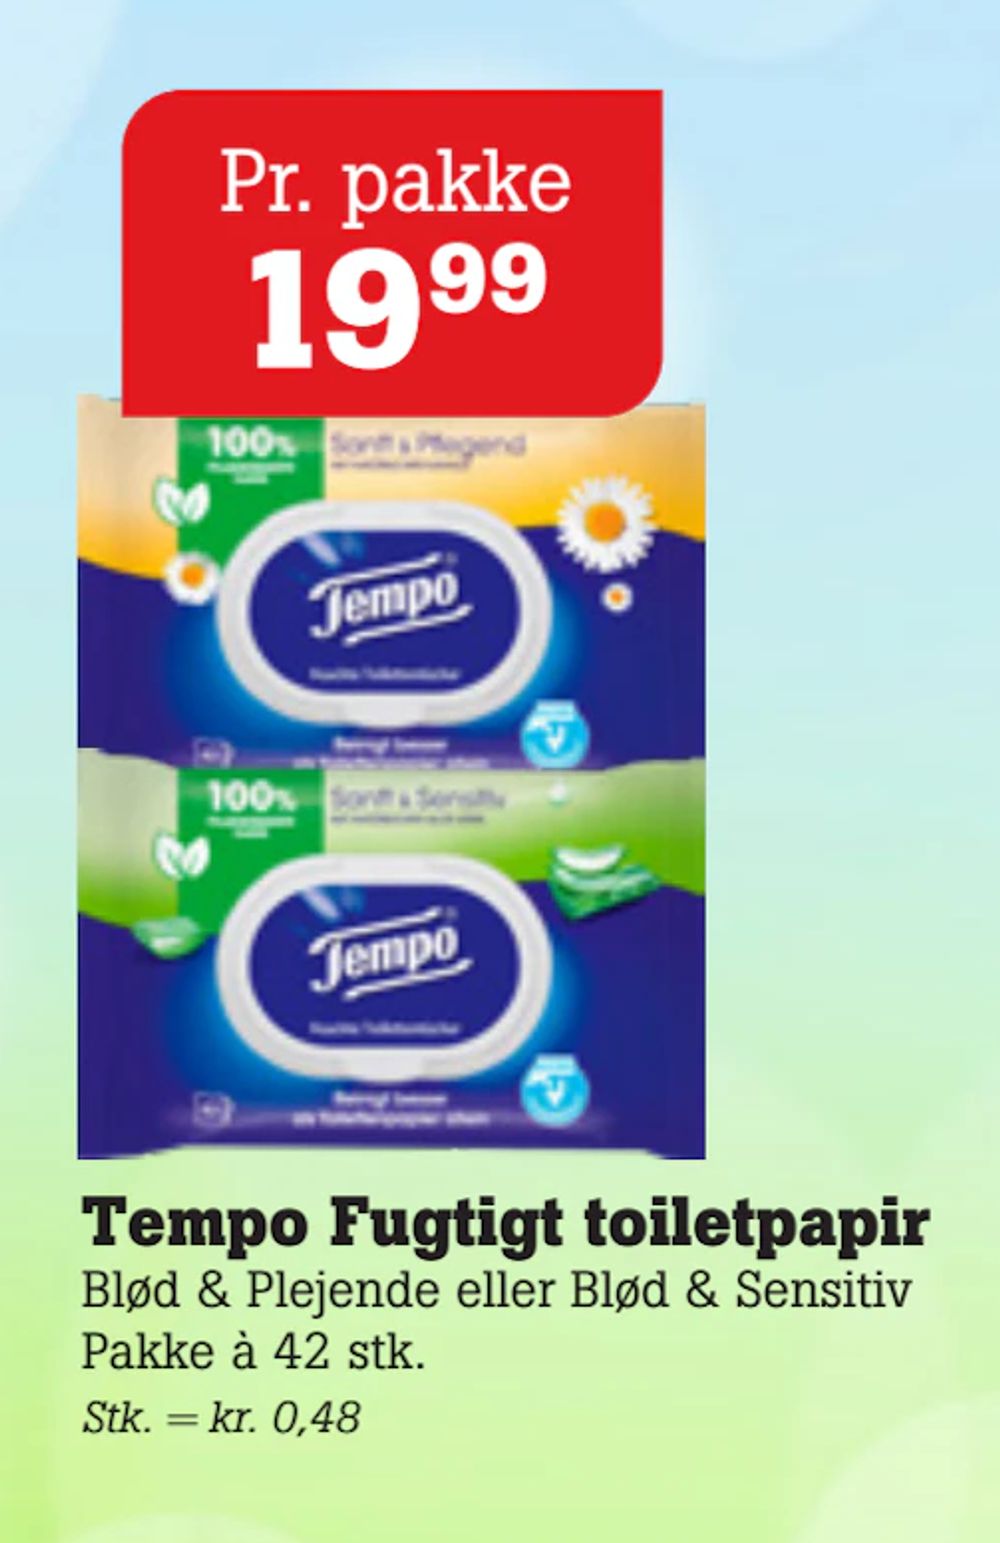 Tilbud på Tempo Fugtigt toiletpapir fra Poetzsch Padborg til 19,99 kr.